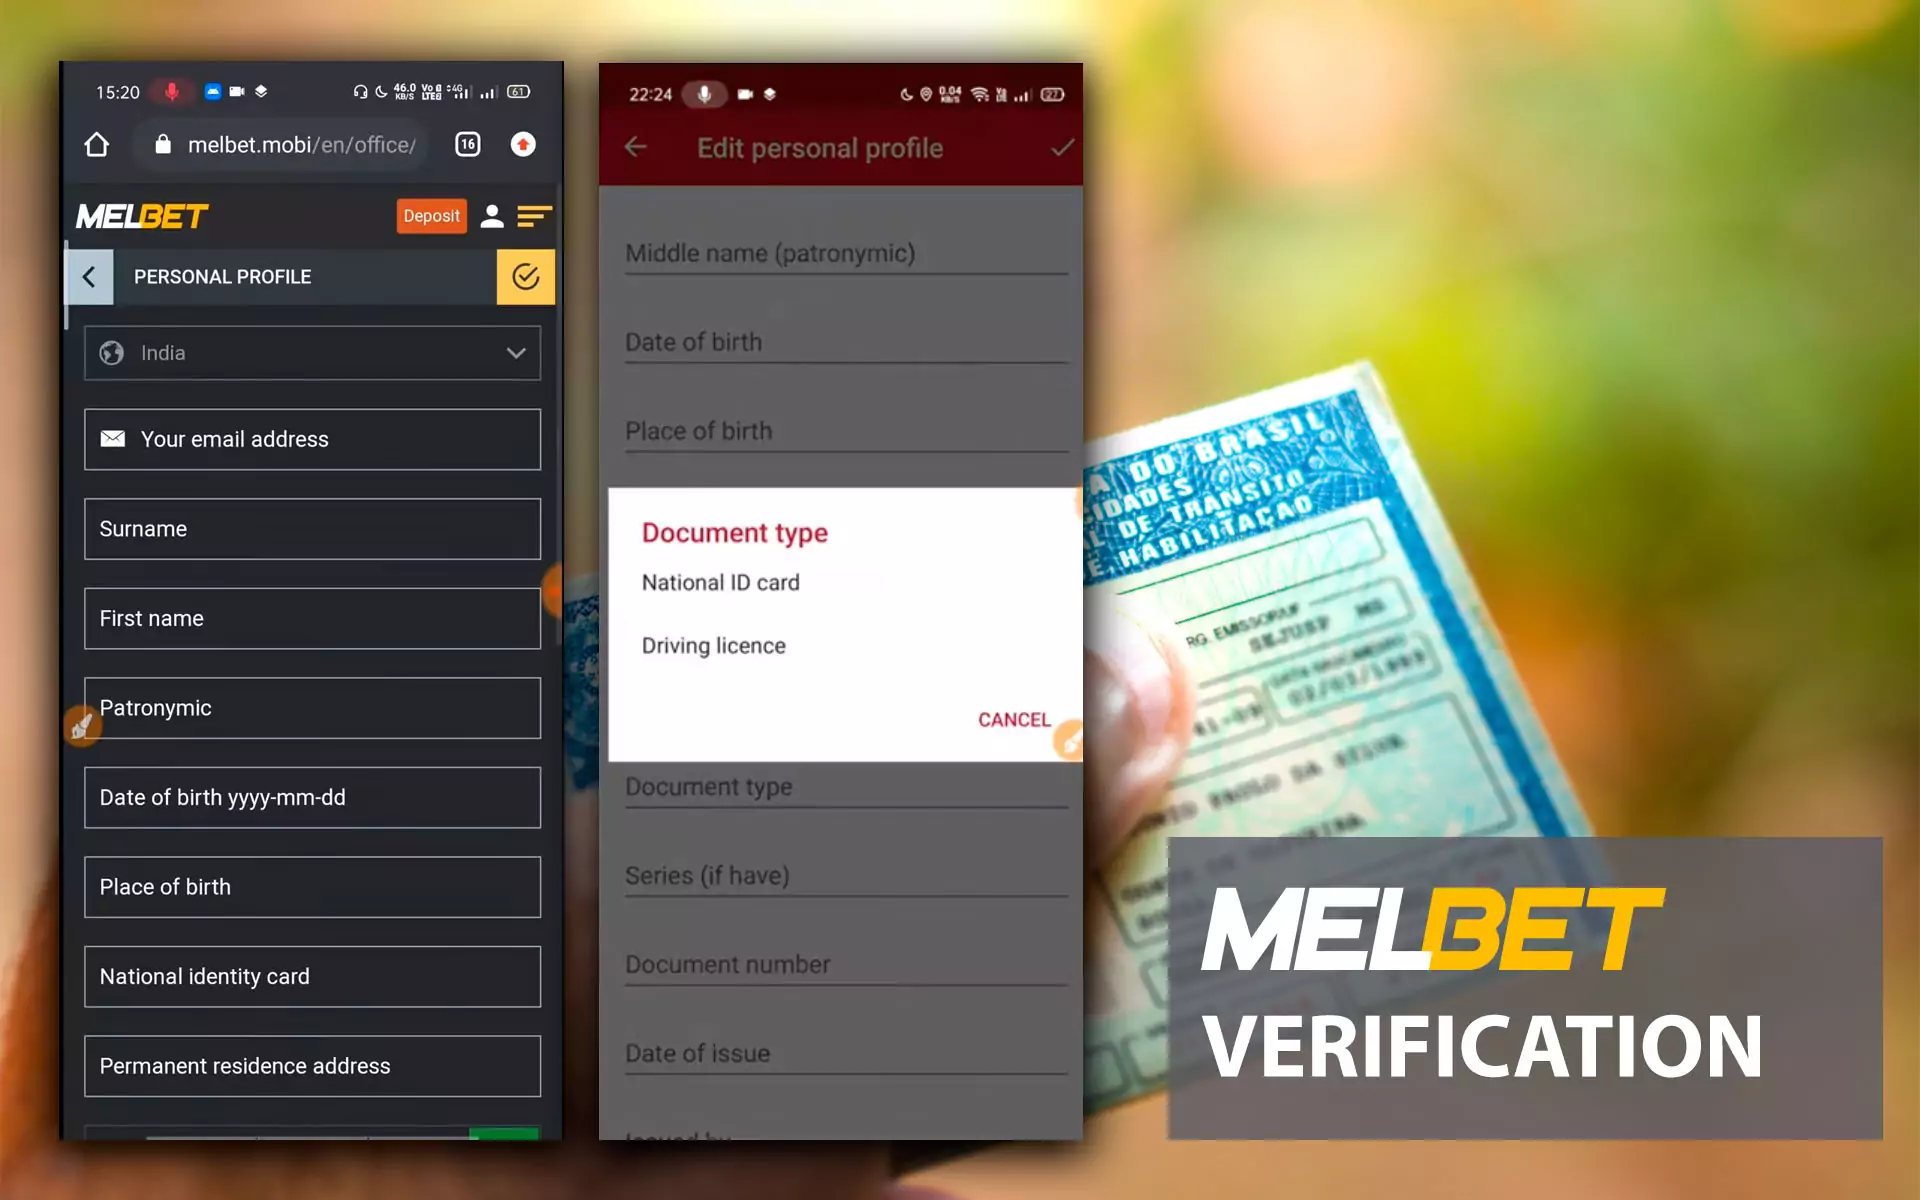 The verification process at Melbet India.